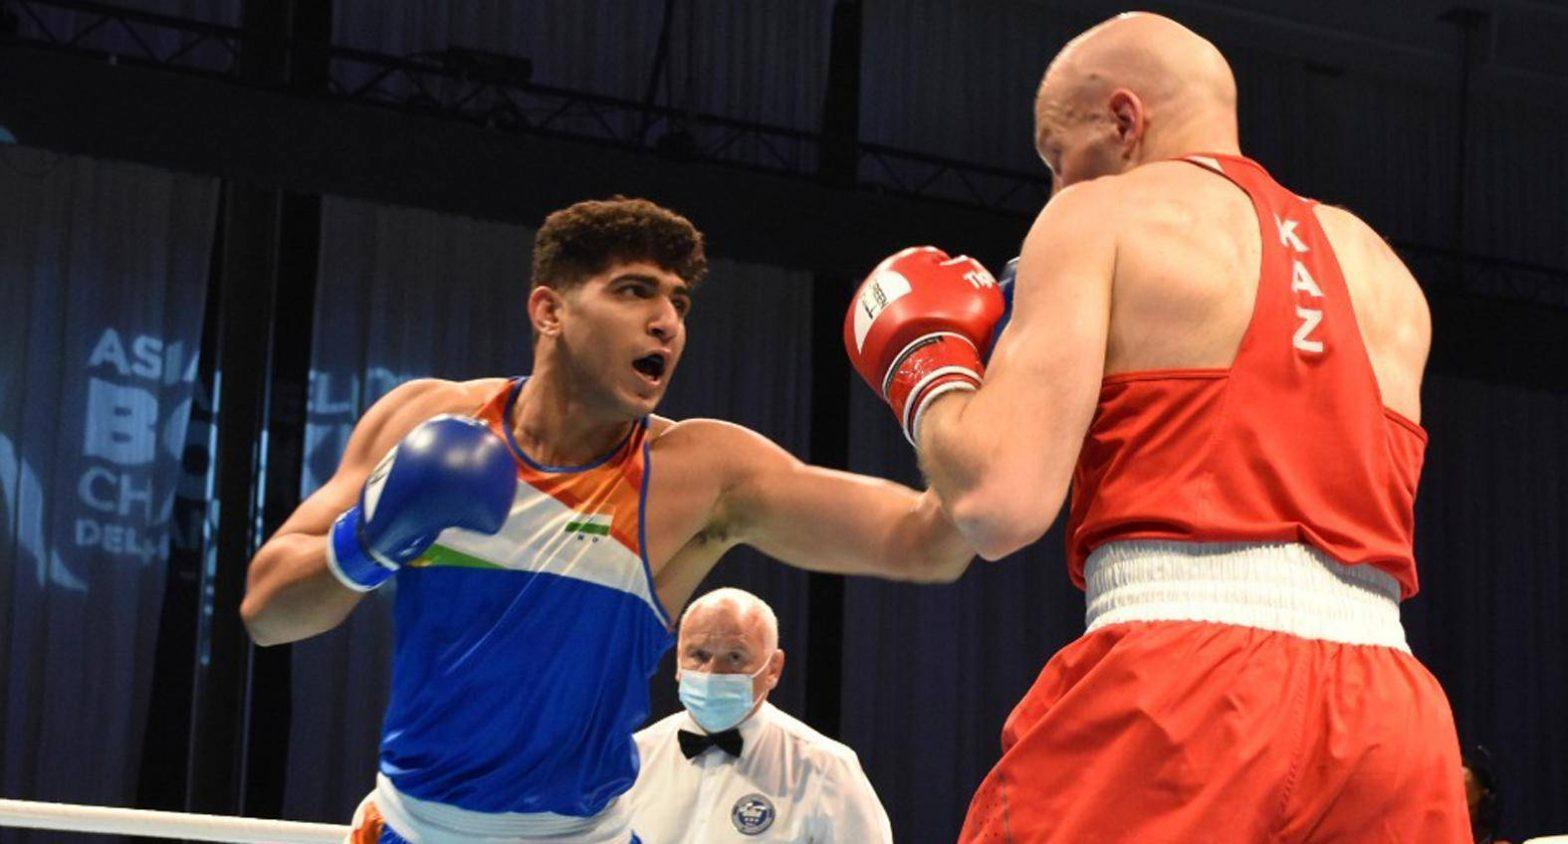 Asian Boxing Championship: India's Sanjeet Kumar wins gold medal | এশিয়ান বক্সিং চ্যাম্পিয়নশিপ: ভারতের সঞ্জিত কুমার স্বর্ণপদক জিতলেন_2.1